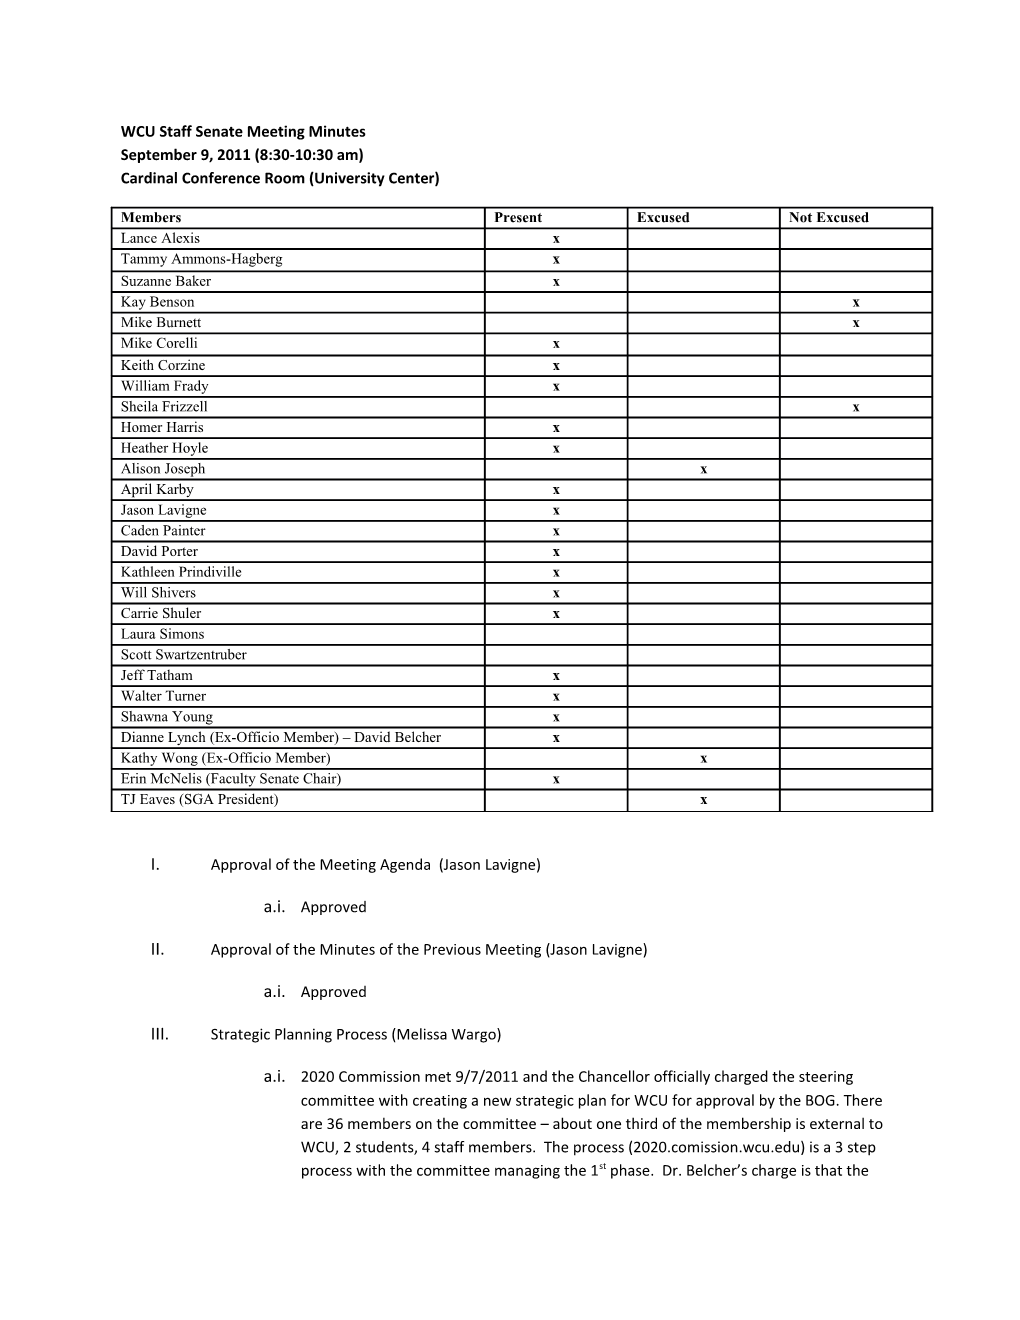 WCU Staff Senate Meeting Minutes September 9, 2011 (8:30-10:30 Am) Cardinal Conference